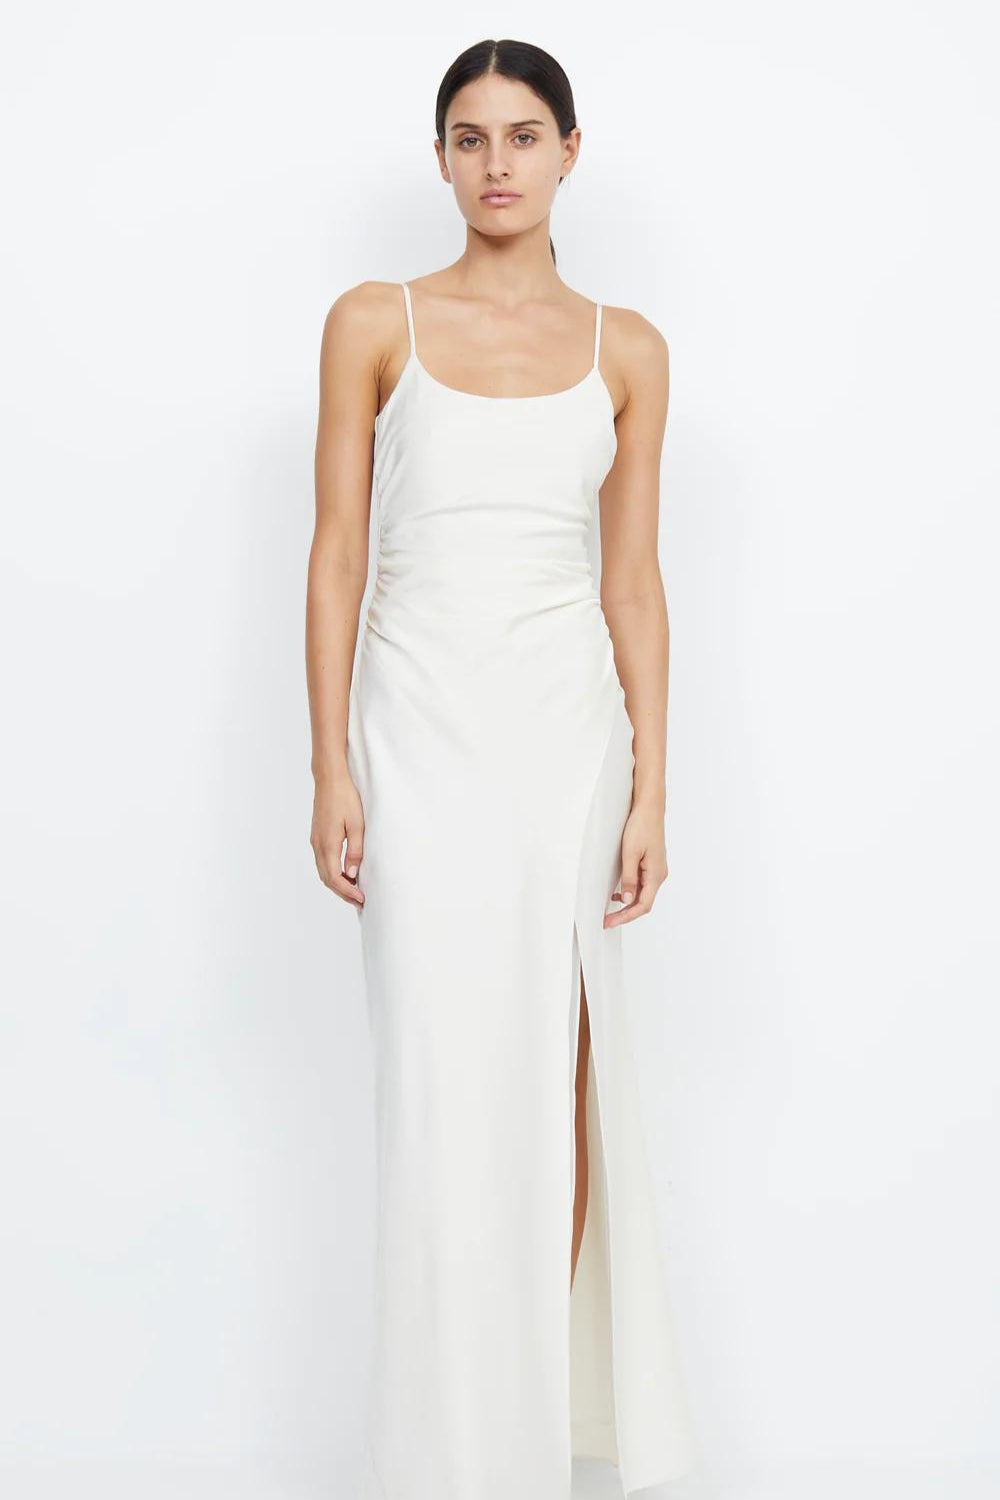 Zenith White Dress